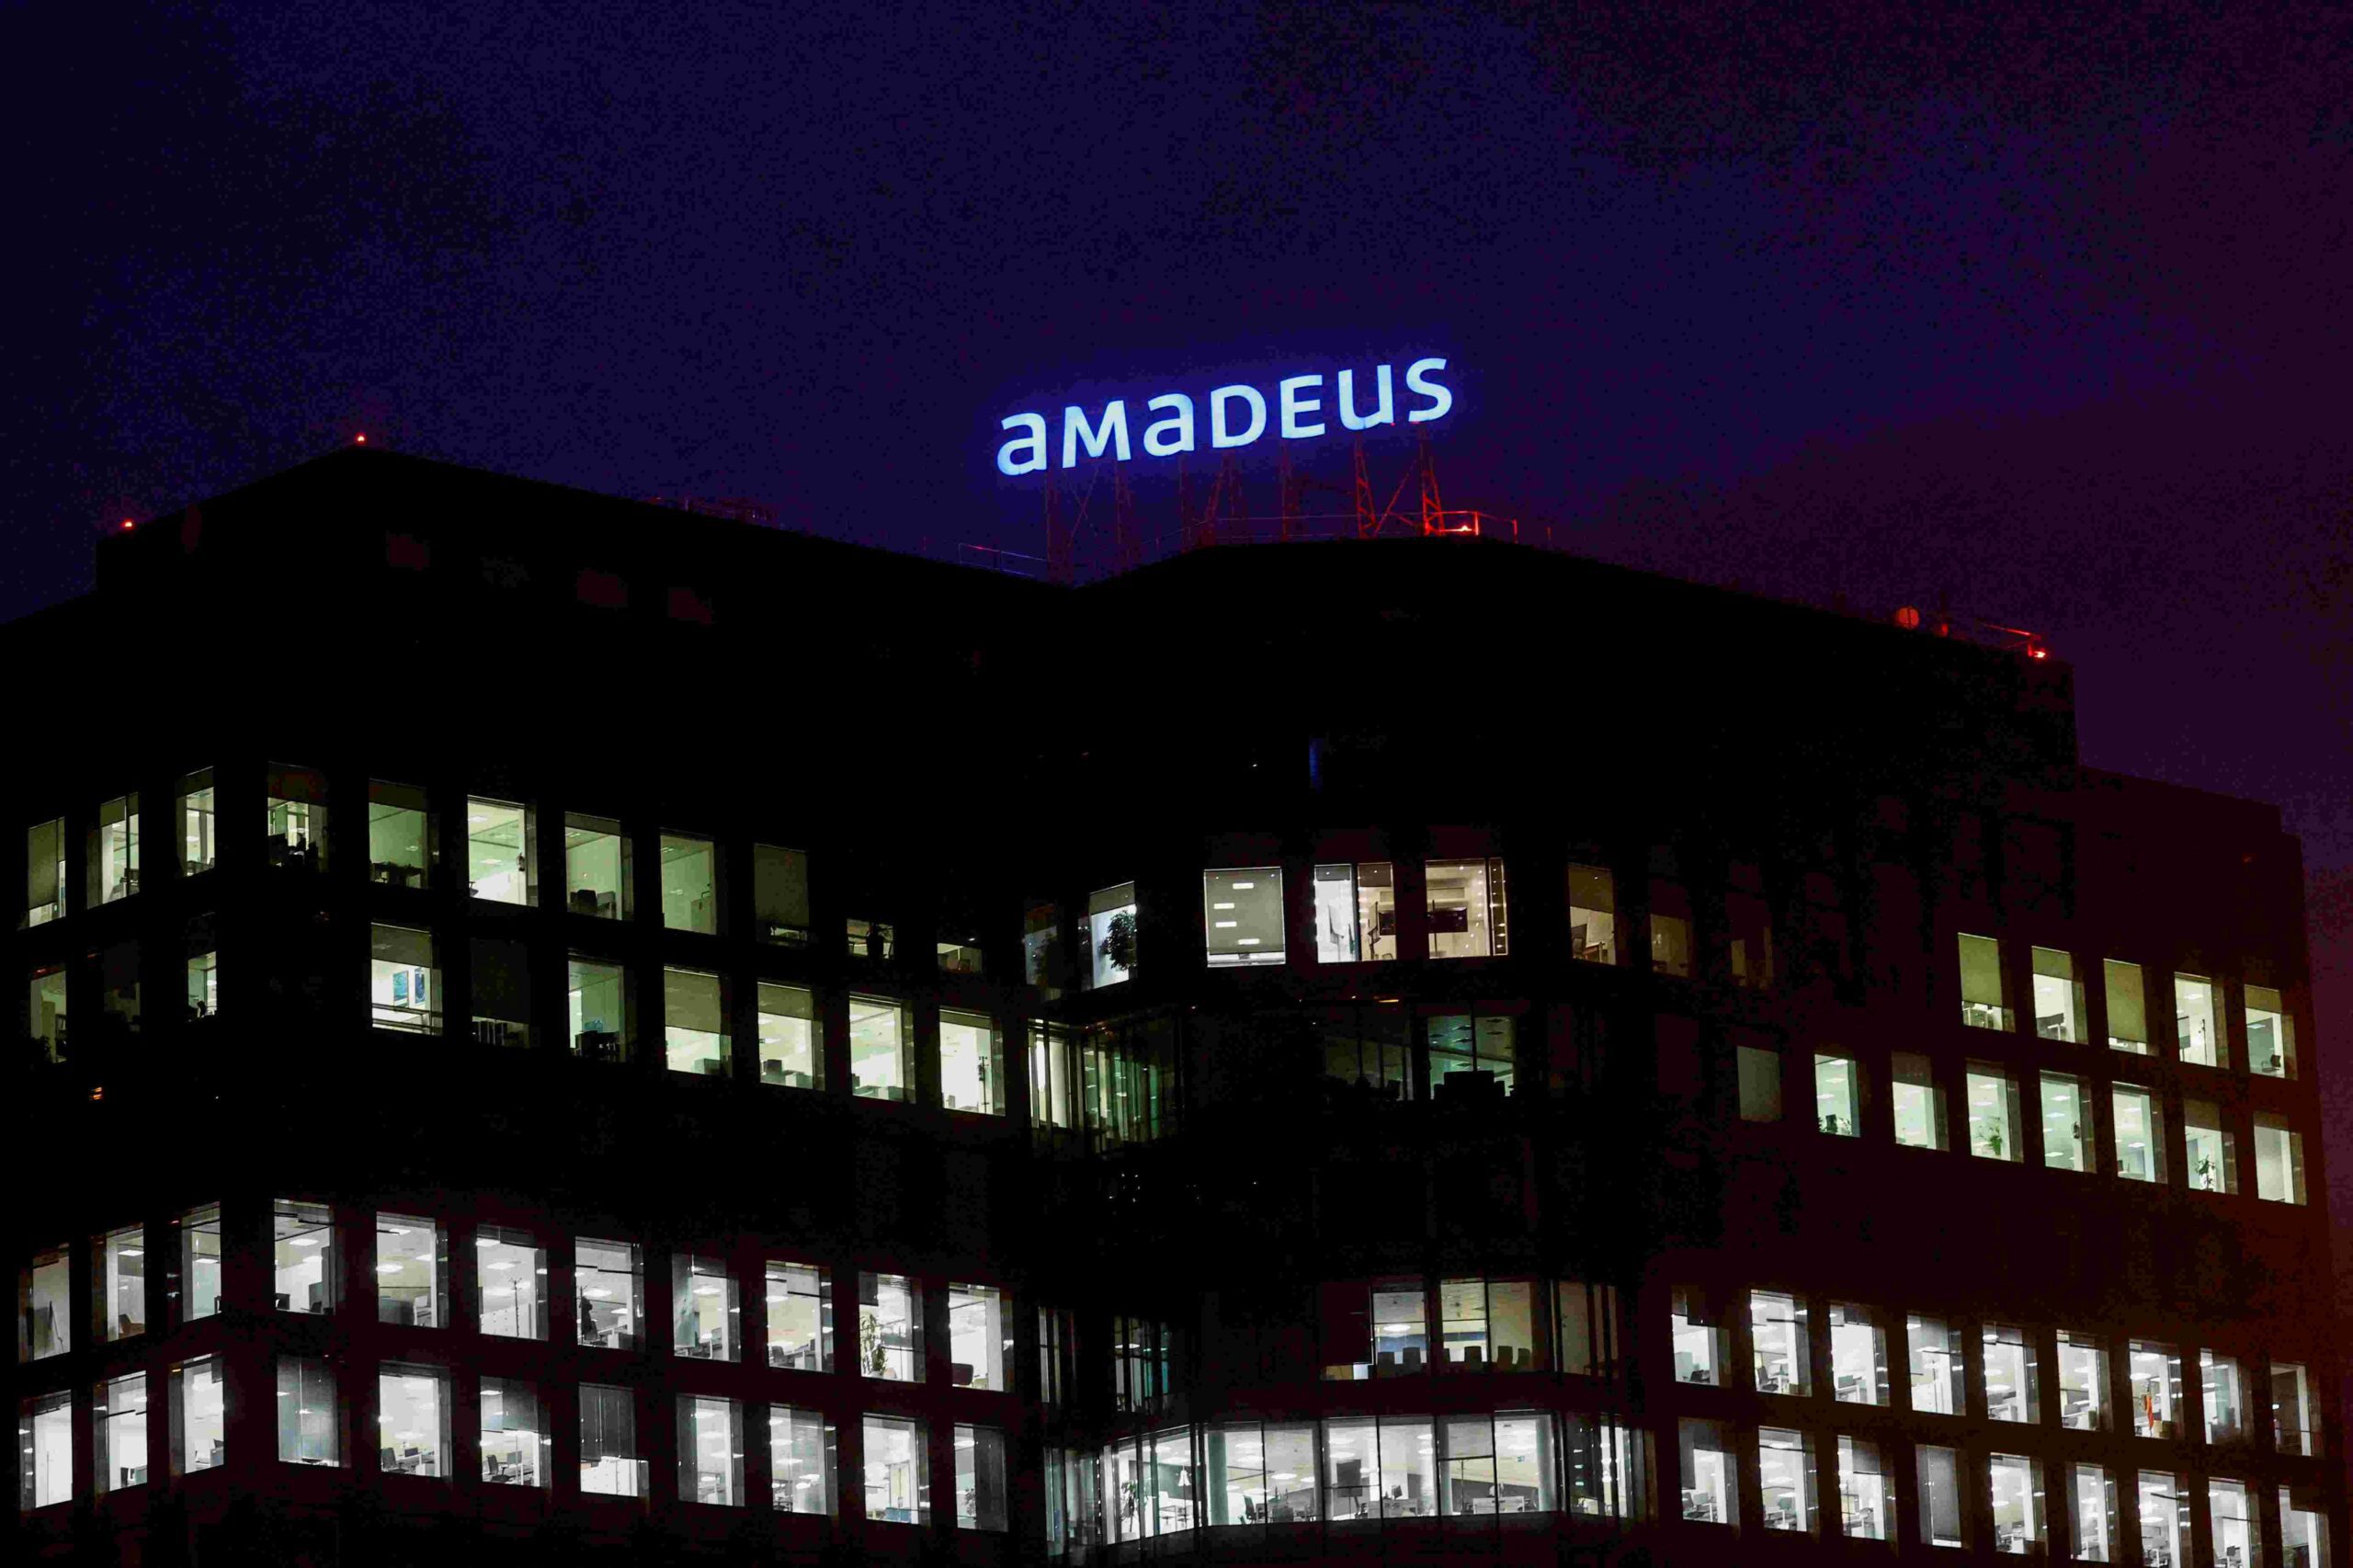 Flash_022924 - Amadeus